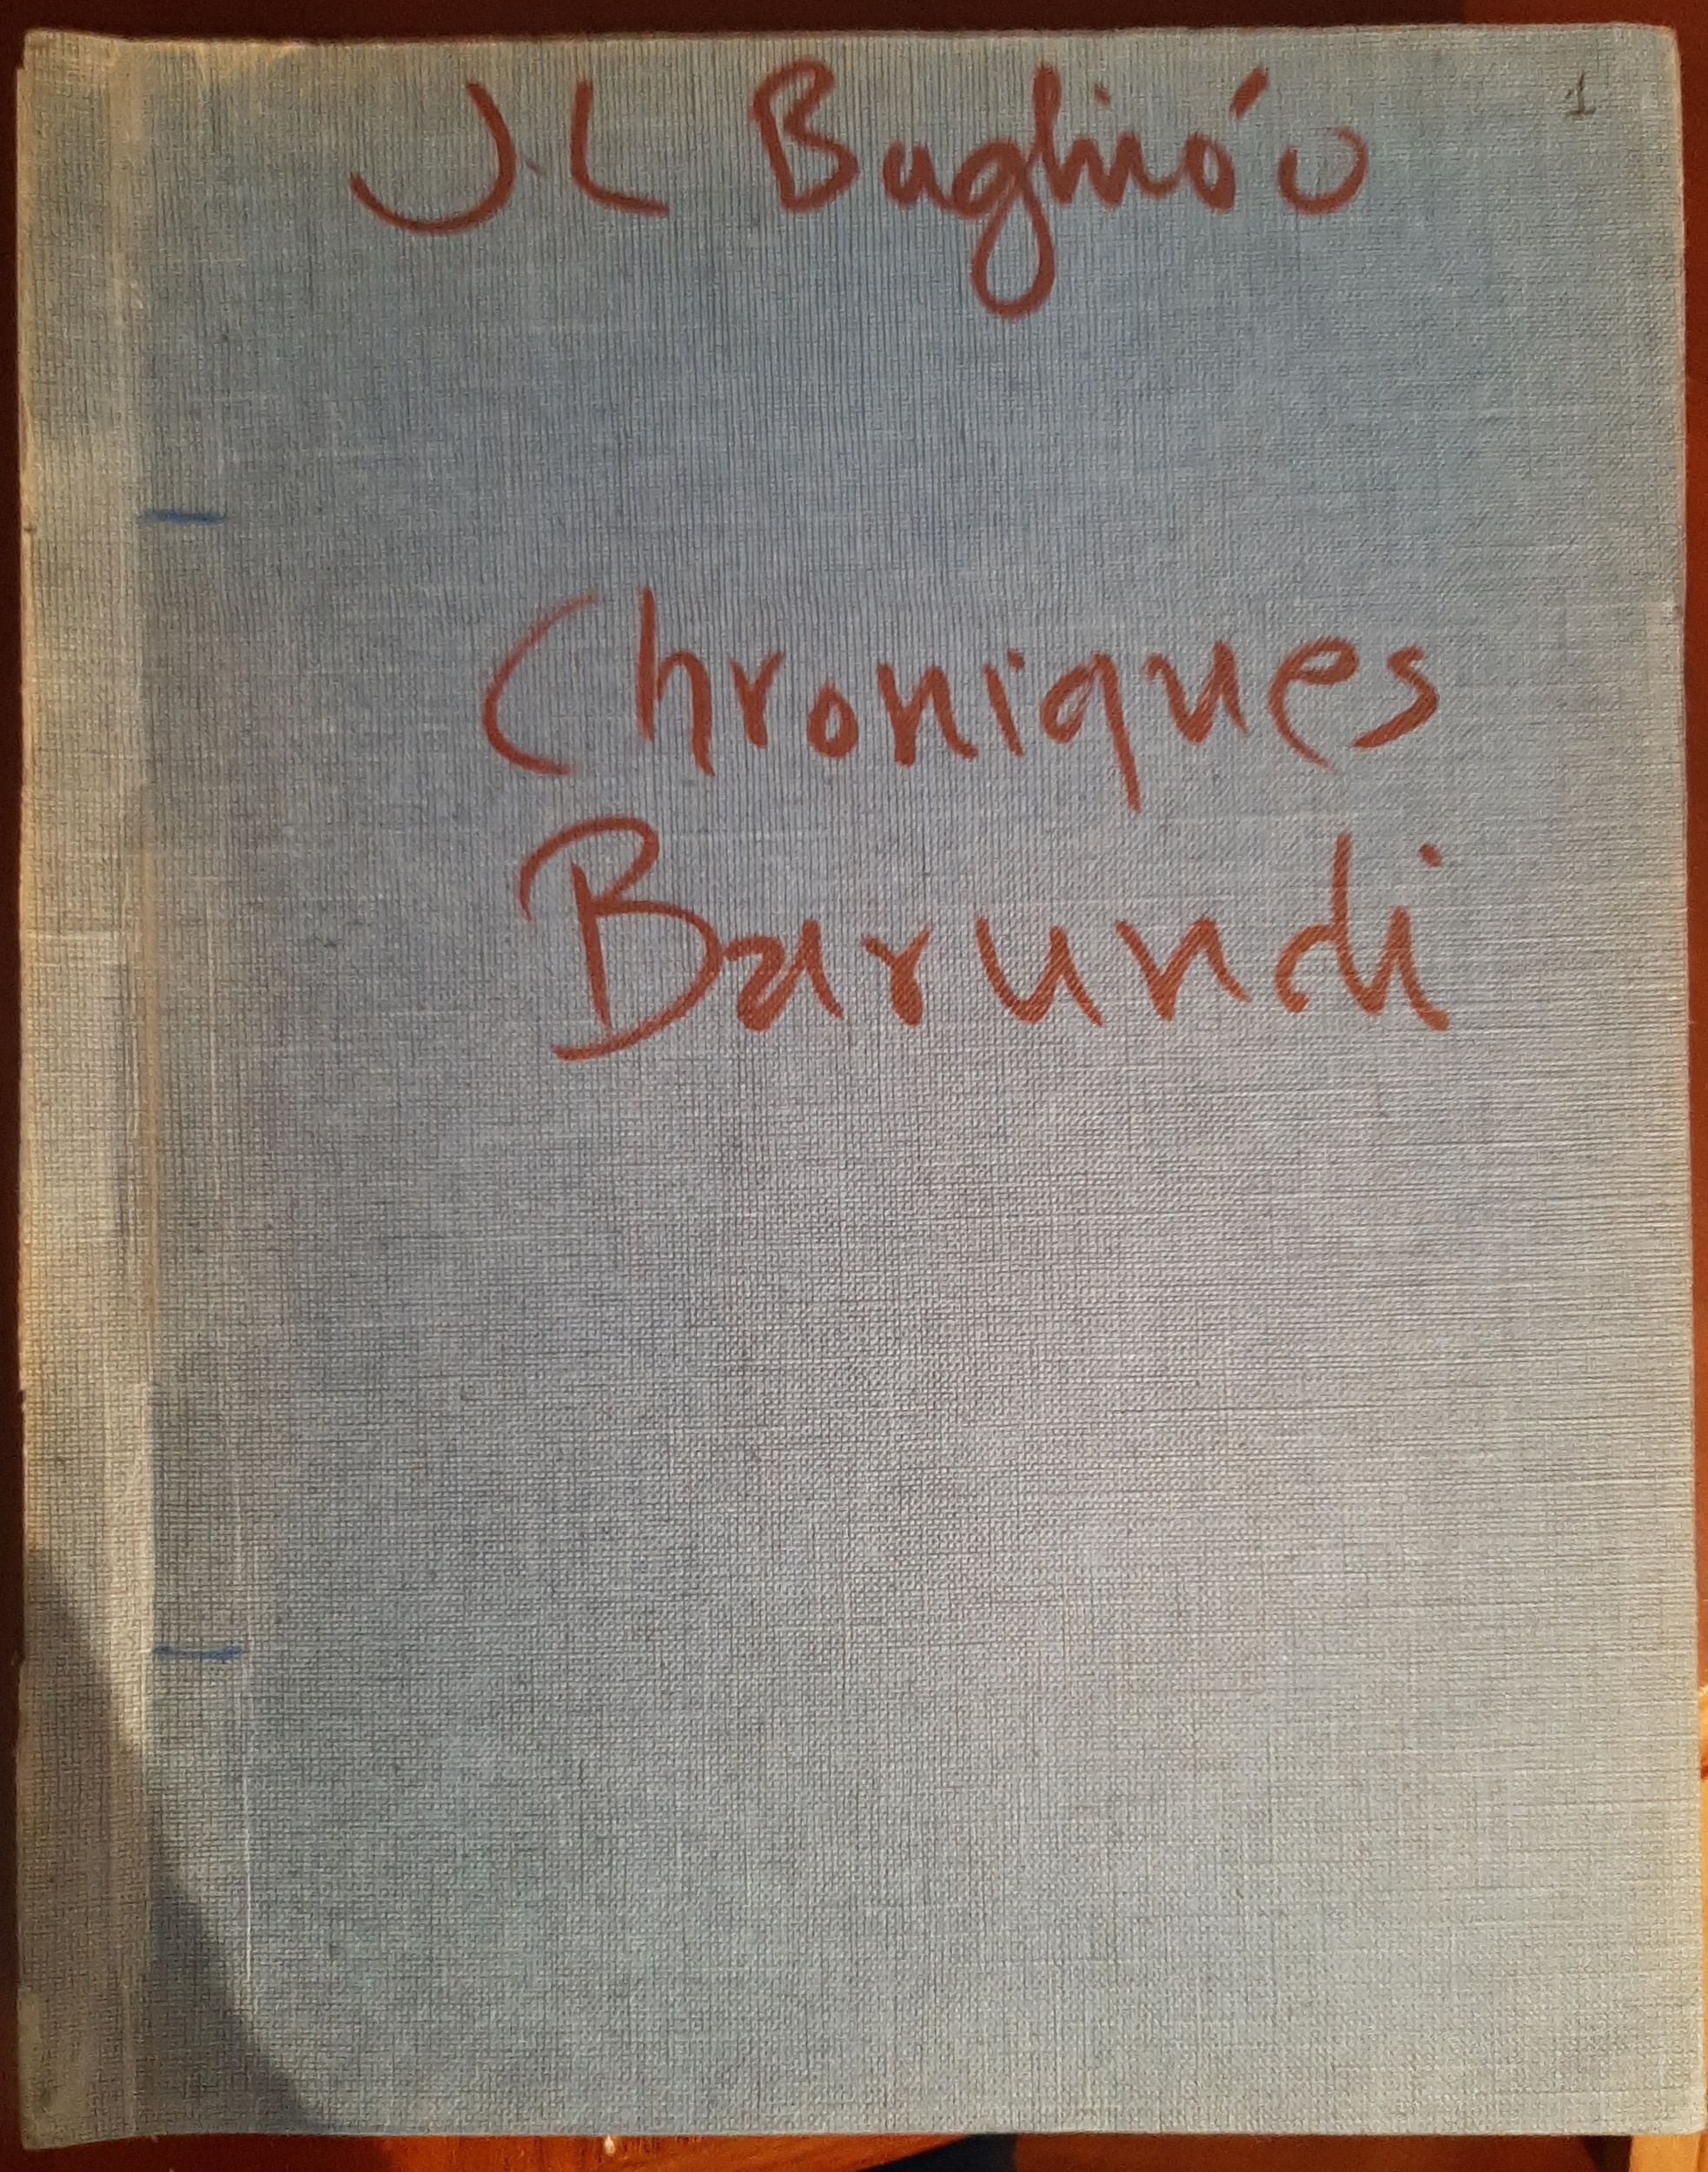 Chroniques Burundi _00001-20230127_143032.jpg